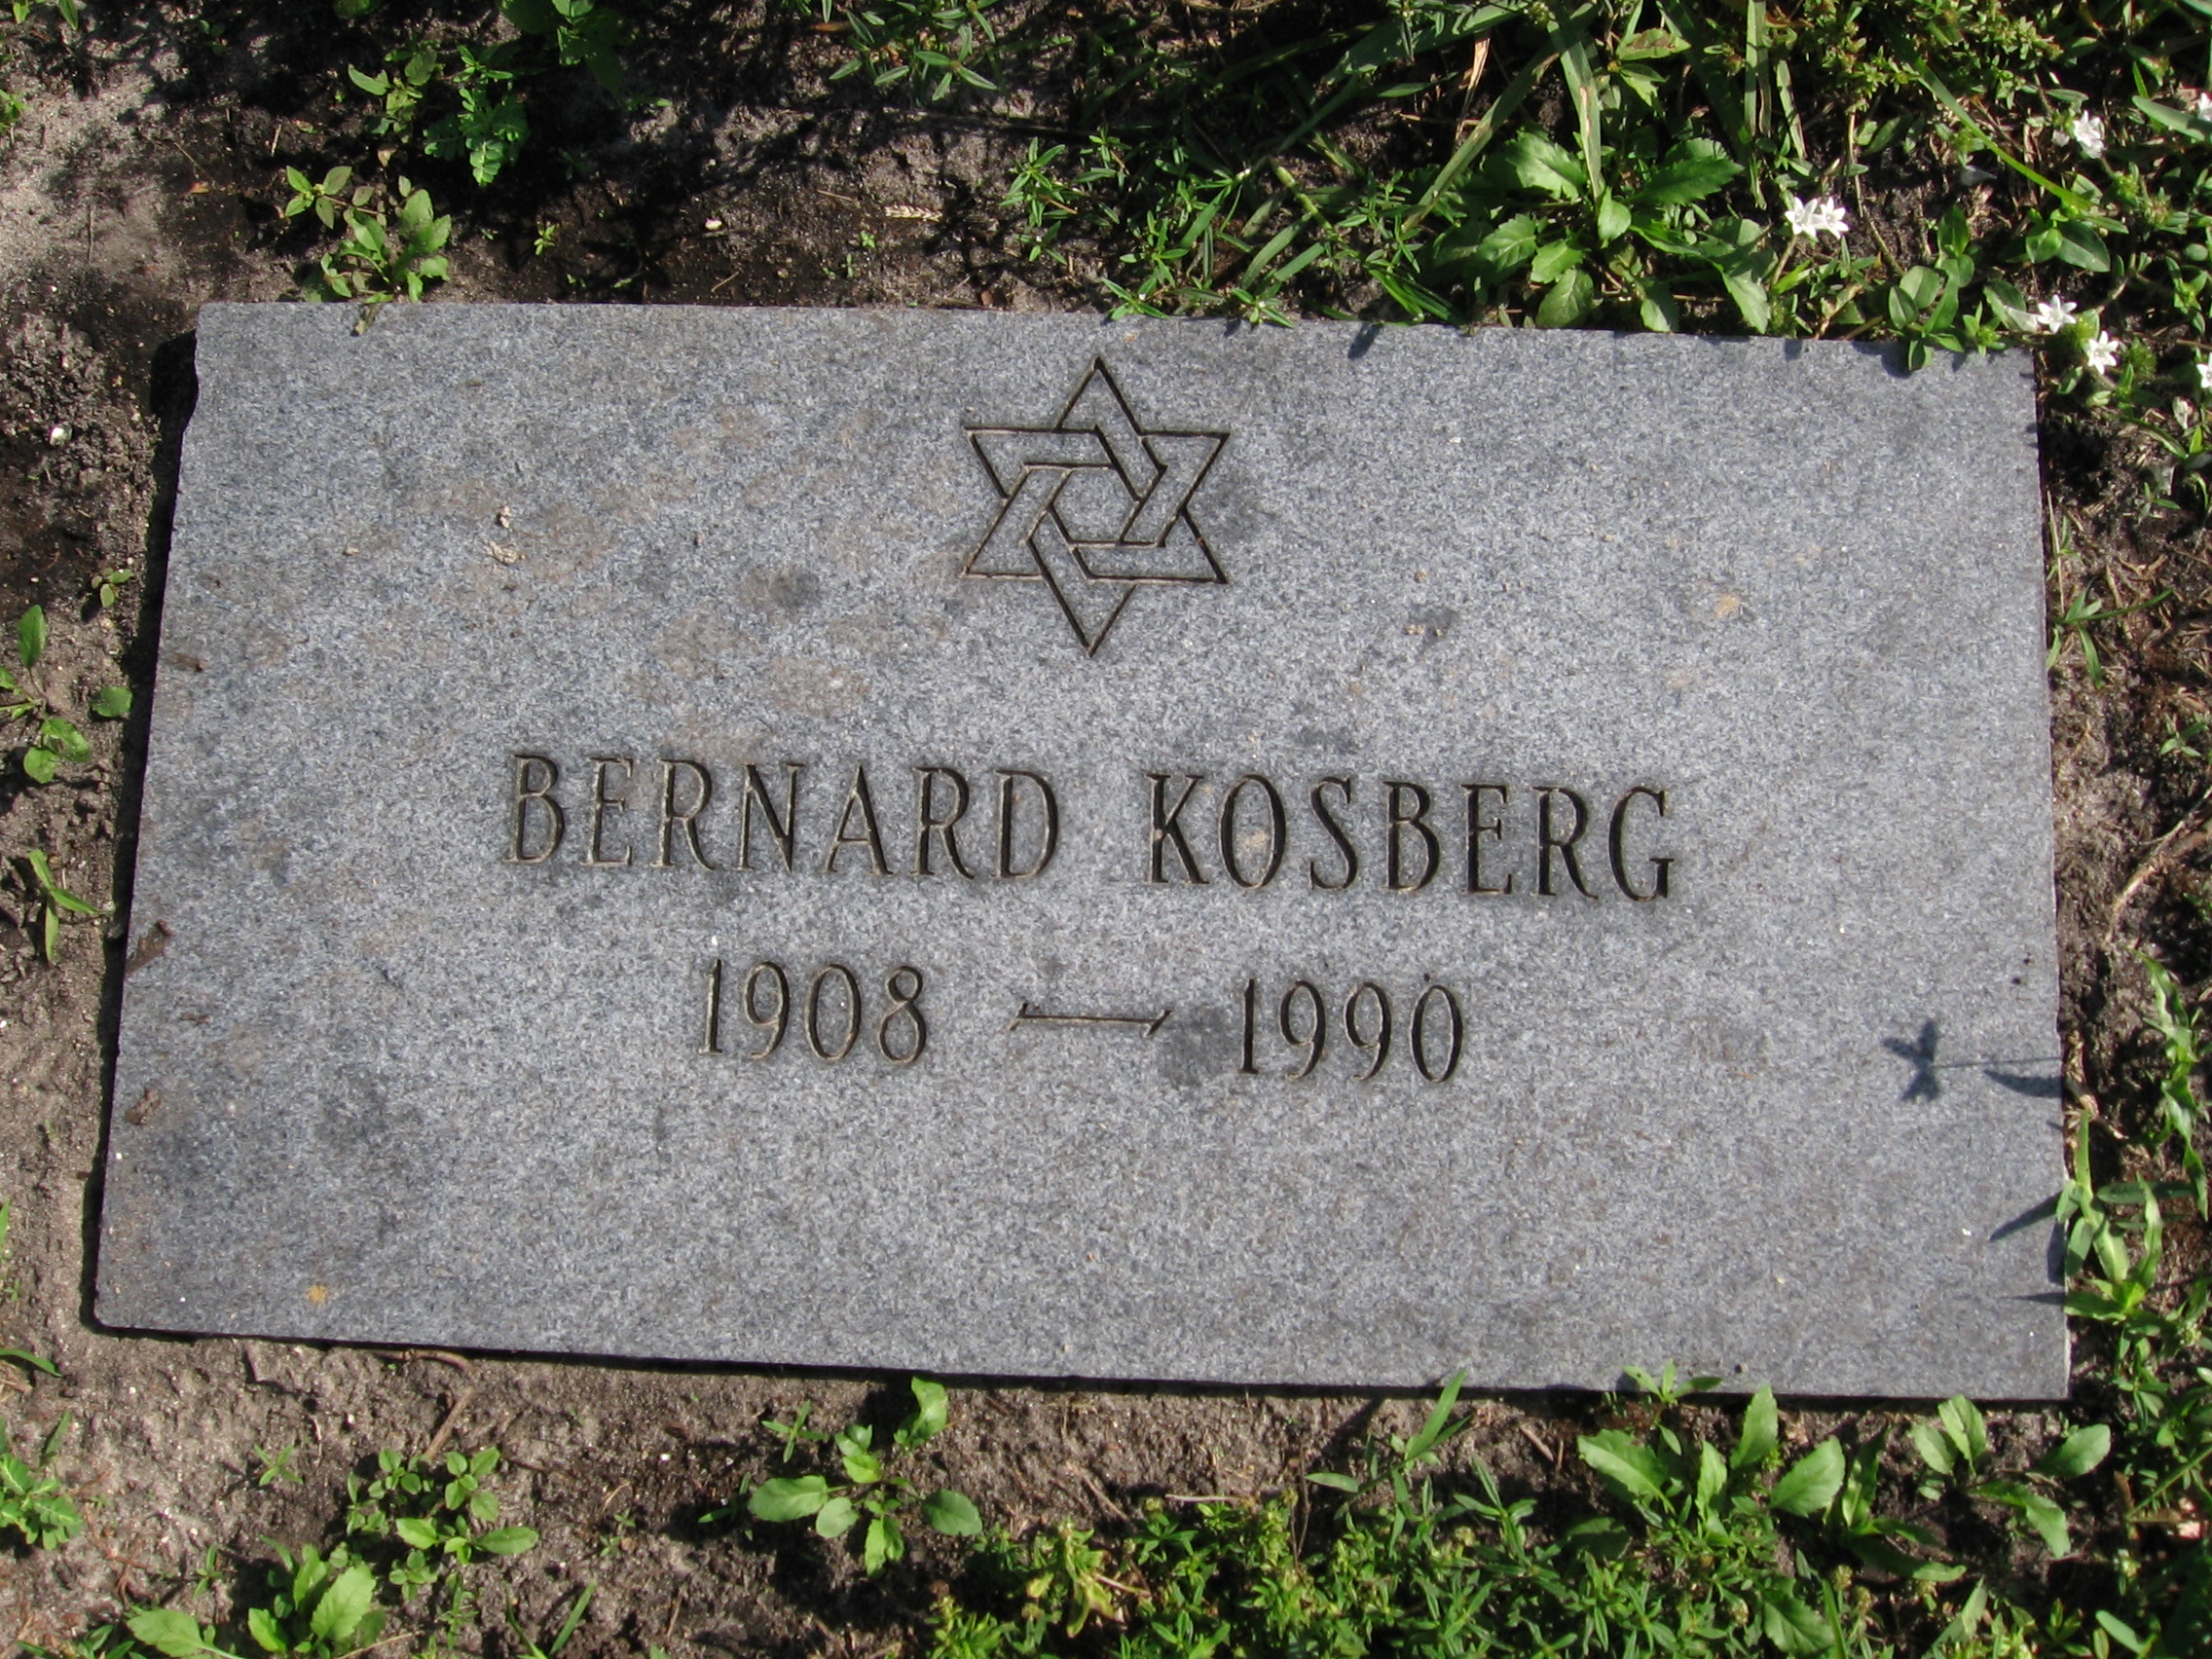 Bernard Kosberg